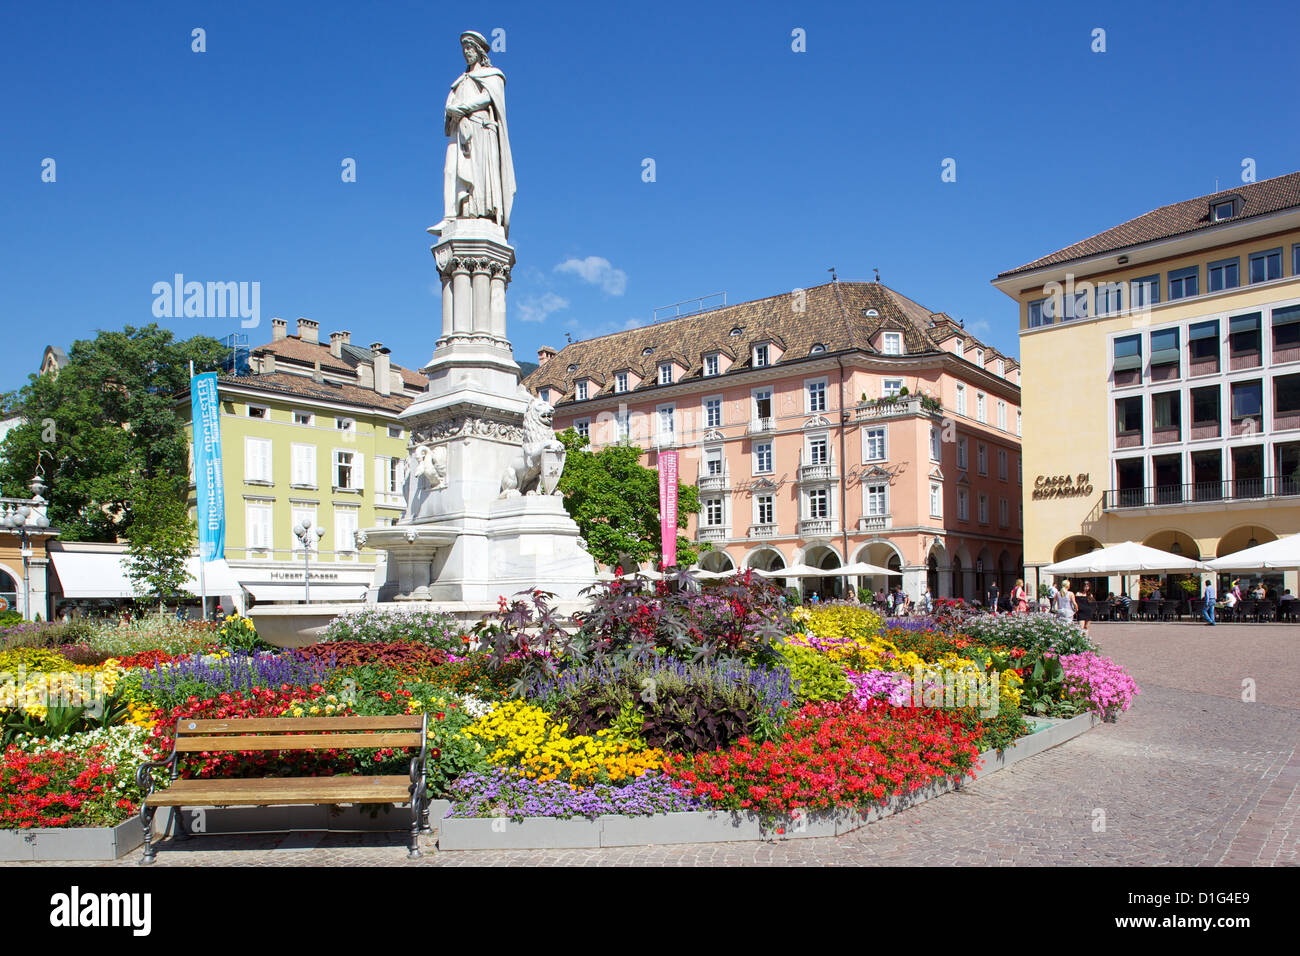 Walther-Denkmal, Walther Platz, Bozen, Provinz Bozen, Trentino-Alto Adige, Italien, Europa Stockfoto